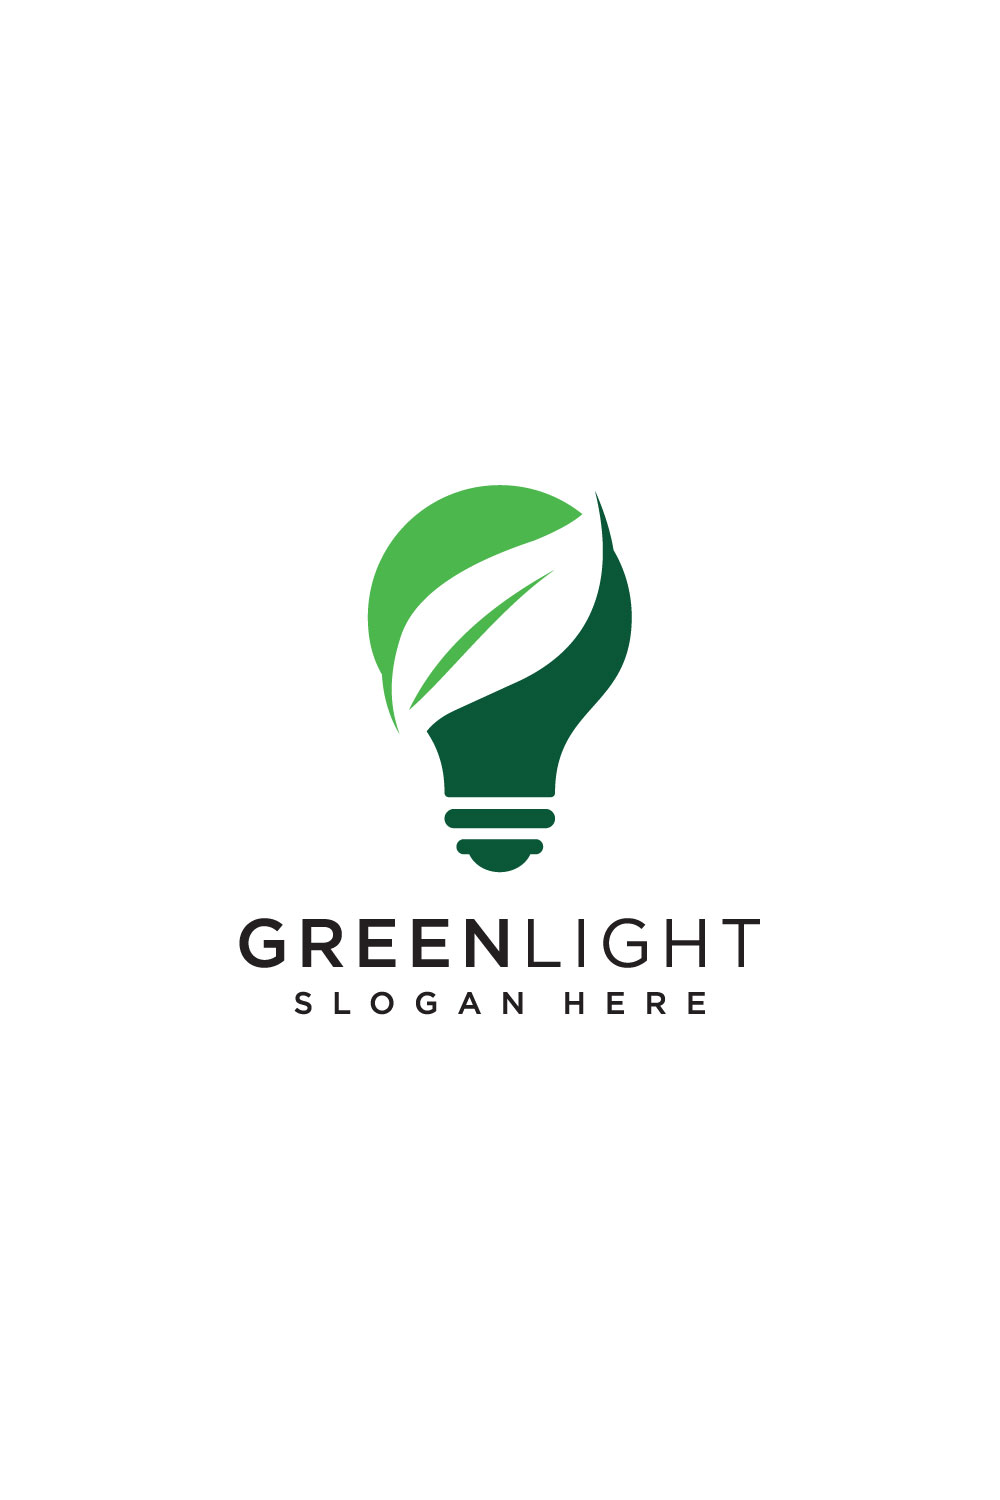 lightbulb leaf logo pinterest preview image.